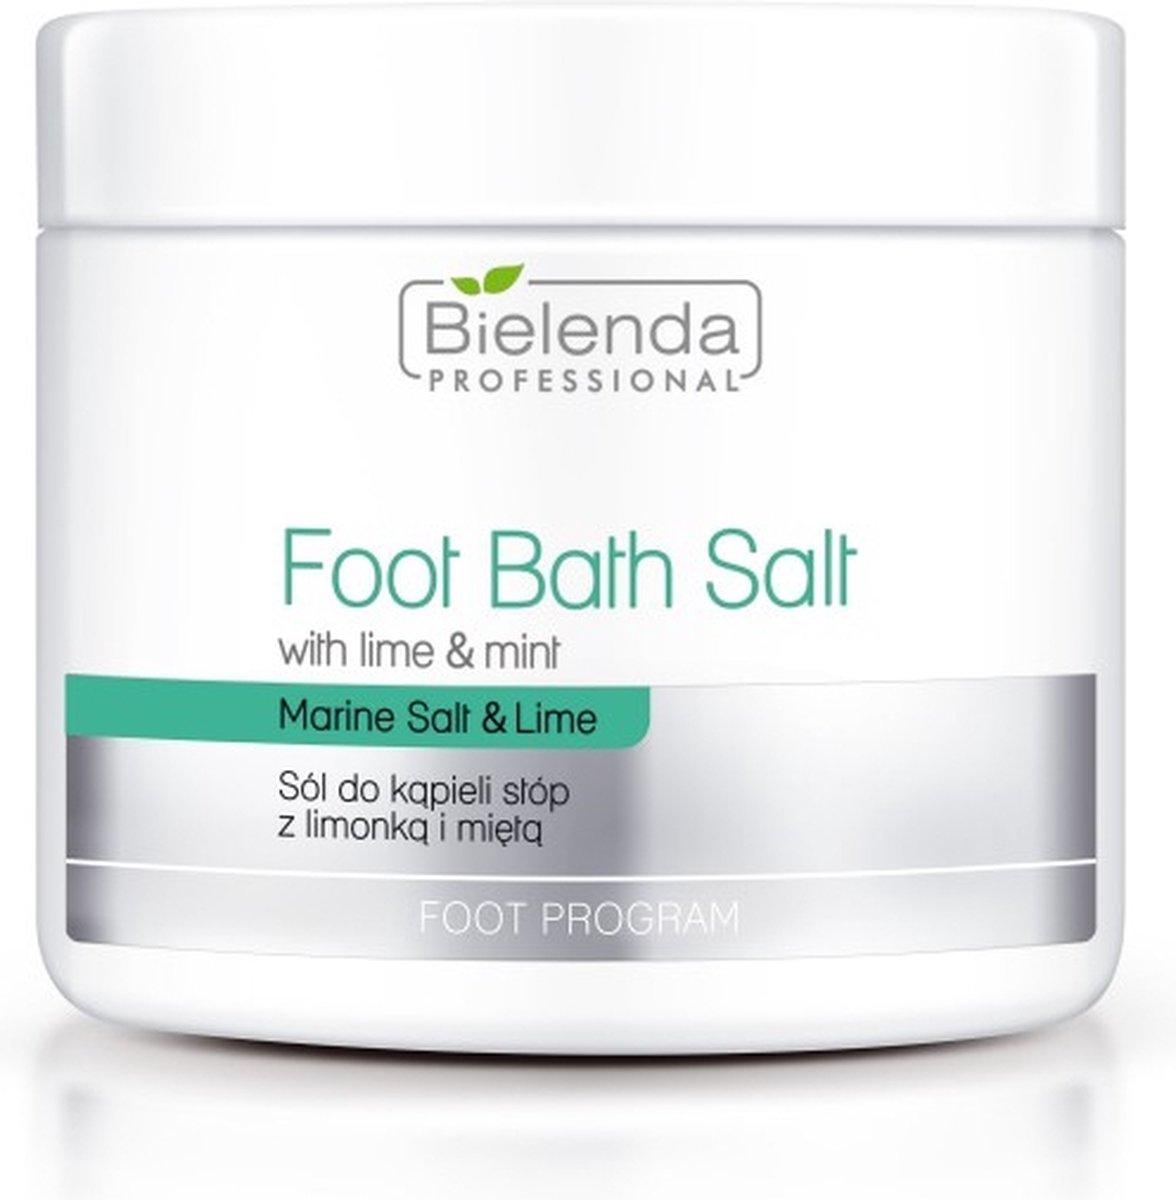 Bielenda Professional - Foot Bath Salt With Lime & Mint Foot Bath Salt With Lime And Mint 600G